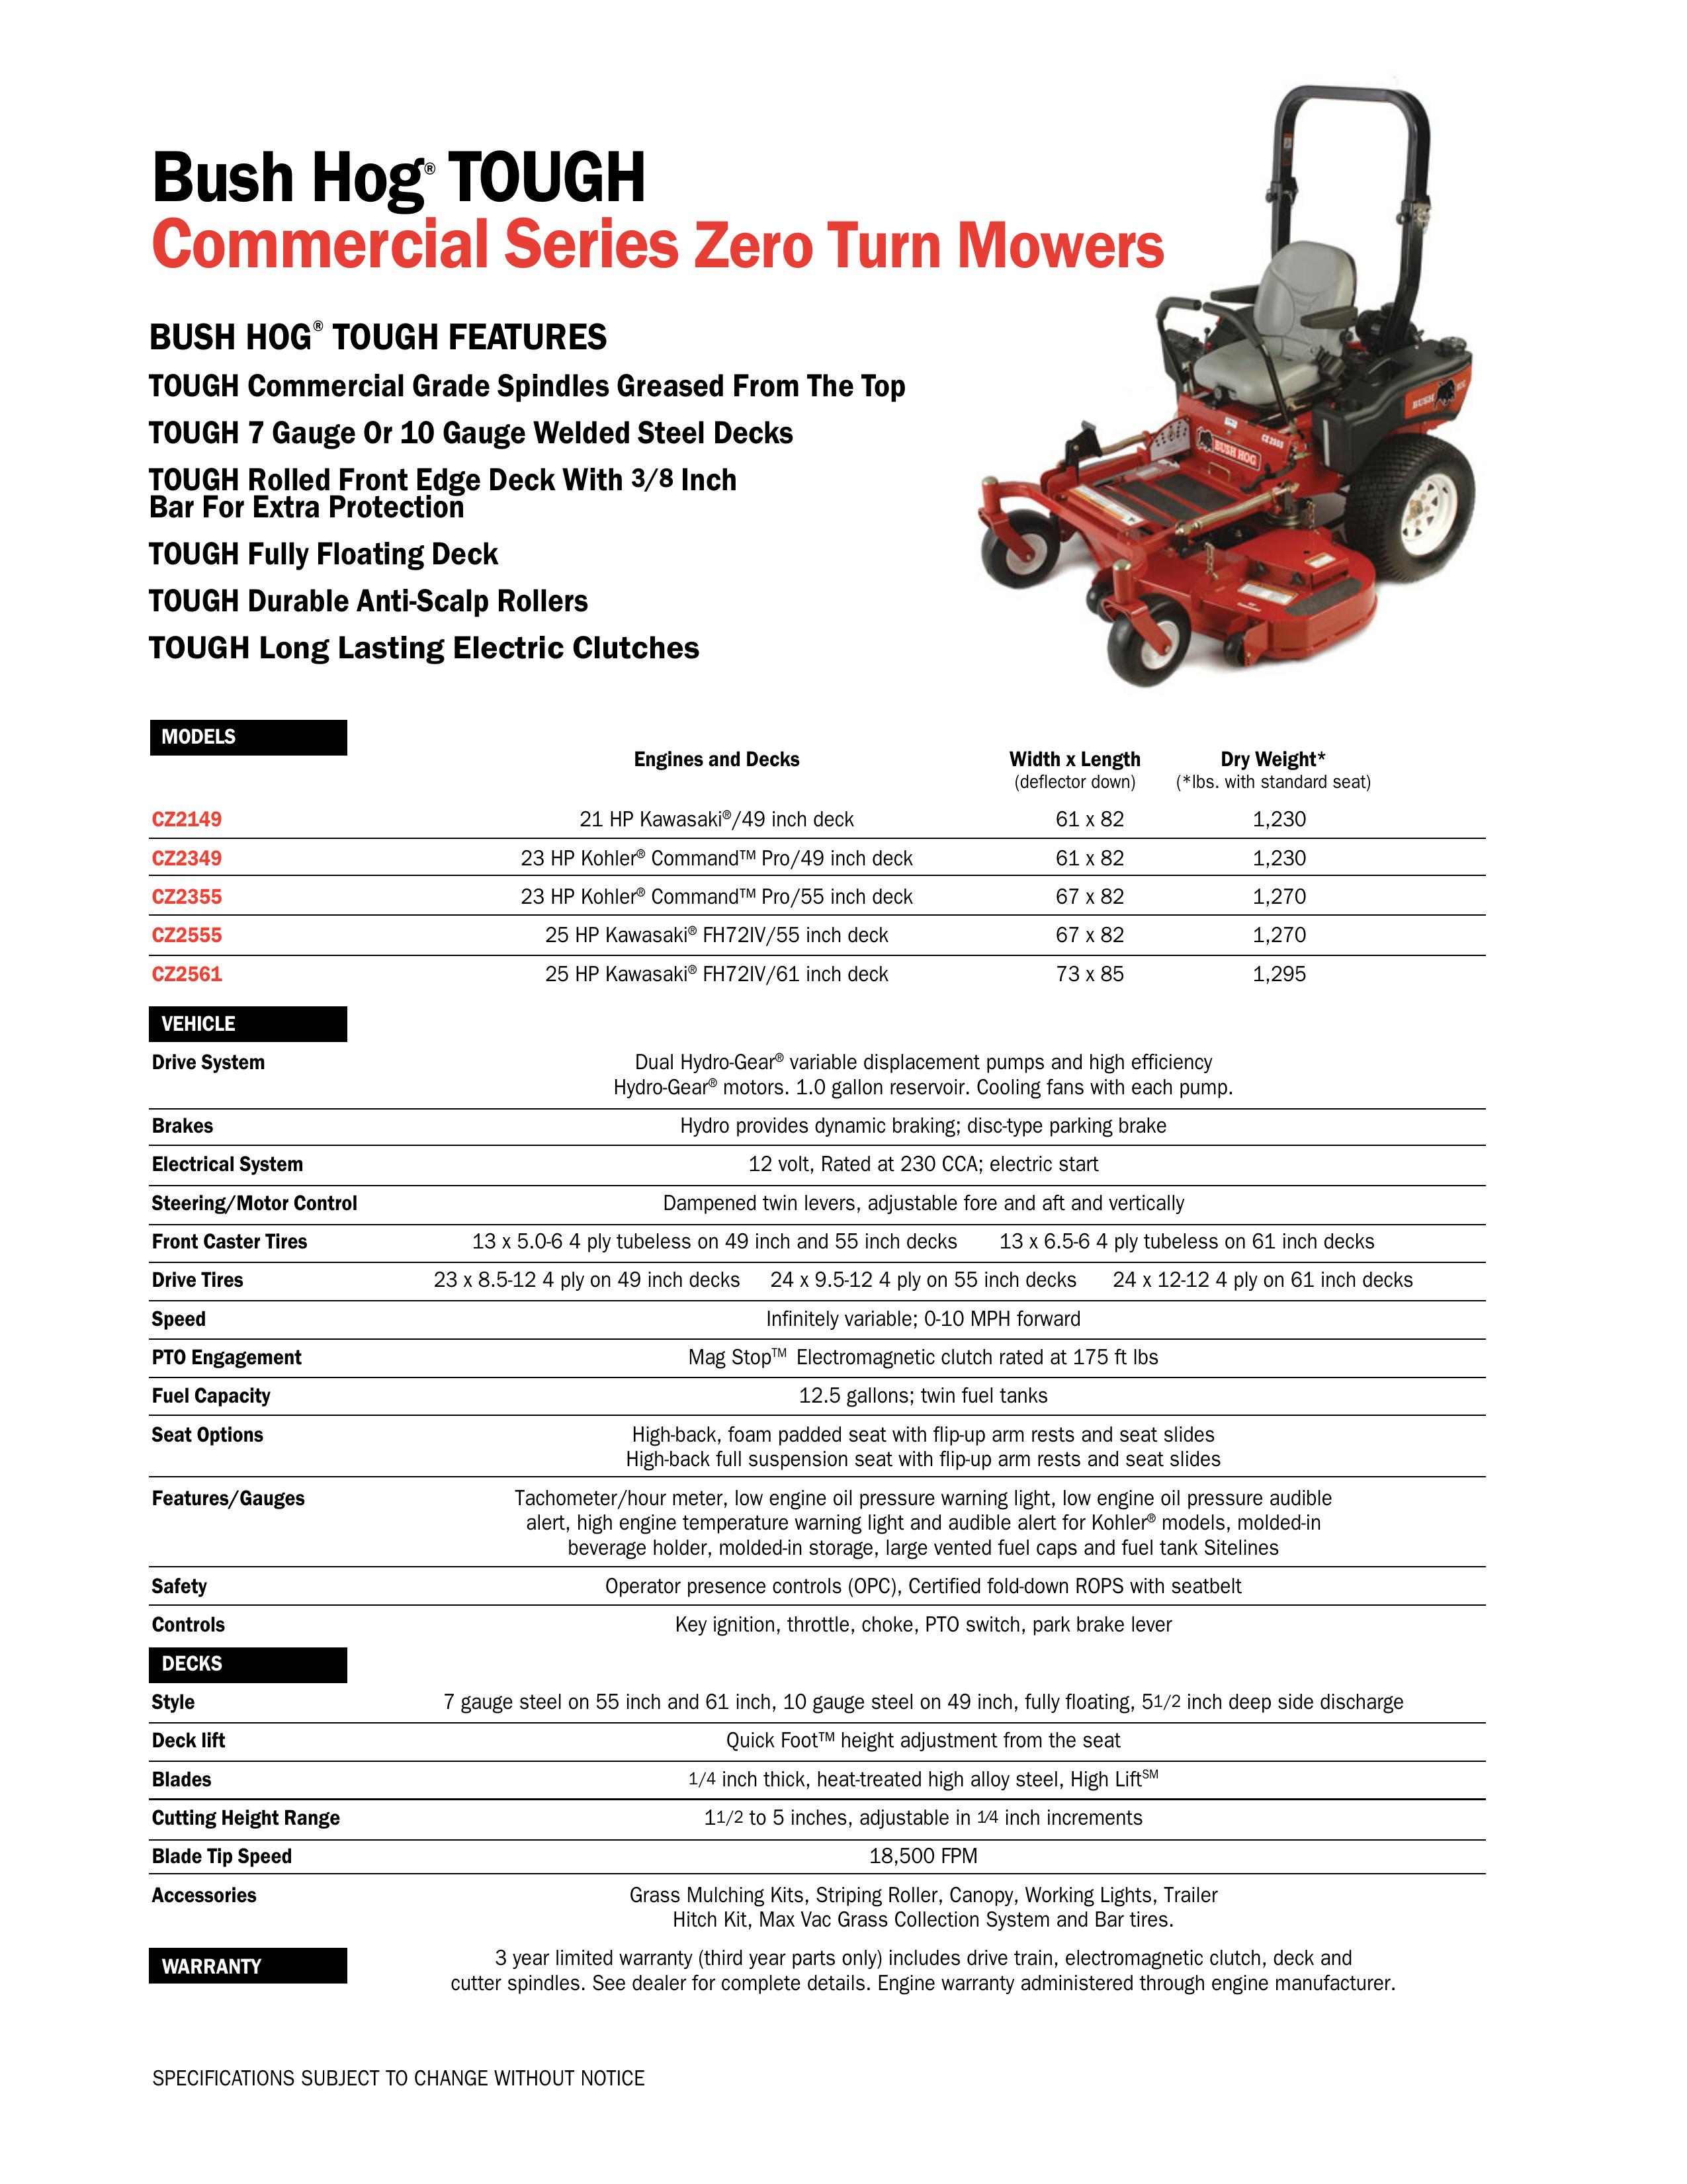 Bush Hog CZ2355 Lawn Mower User Manual